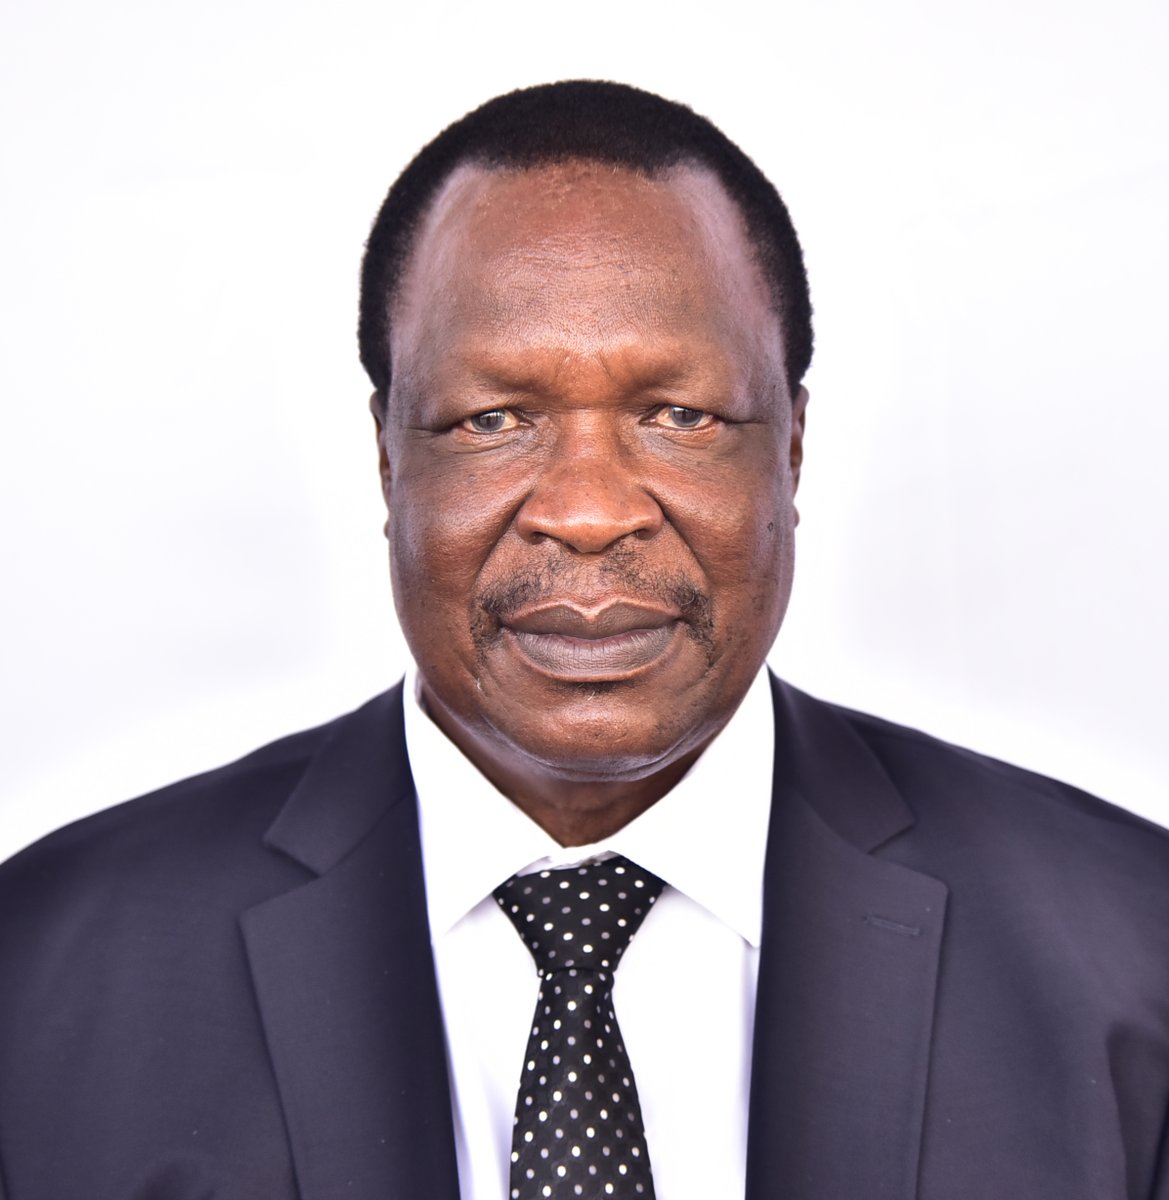 #KnowYourMP

Name: Hon. Sam Mangusho Cheptoris

Constituency: Kapchorwa Municipality

Profession: Teacher

Political Party: NRM
#11thParliament